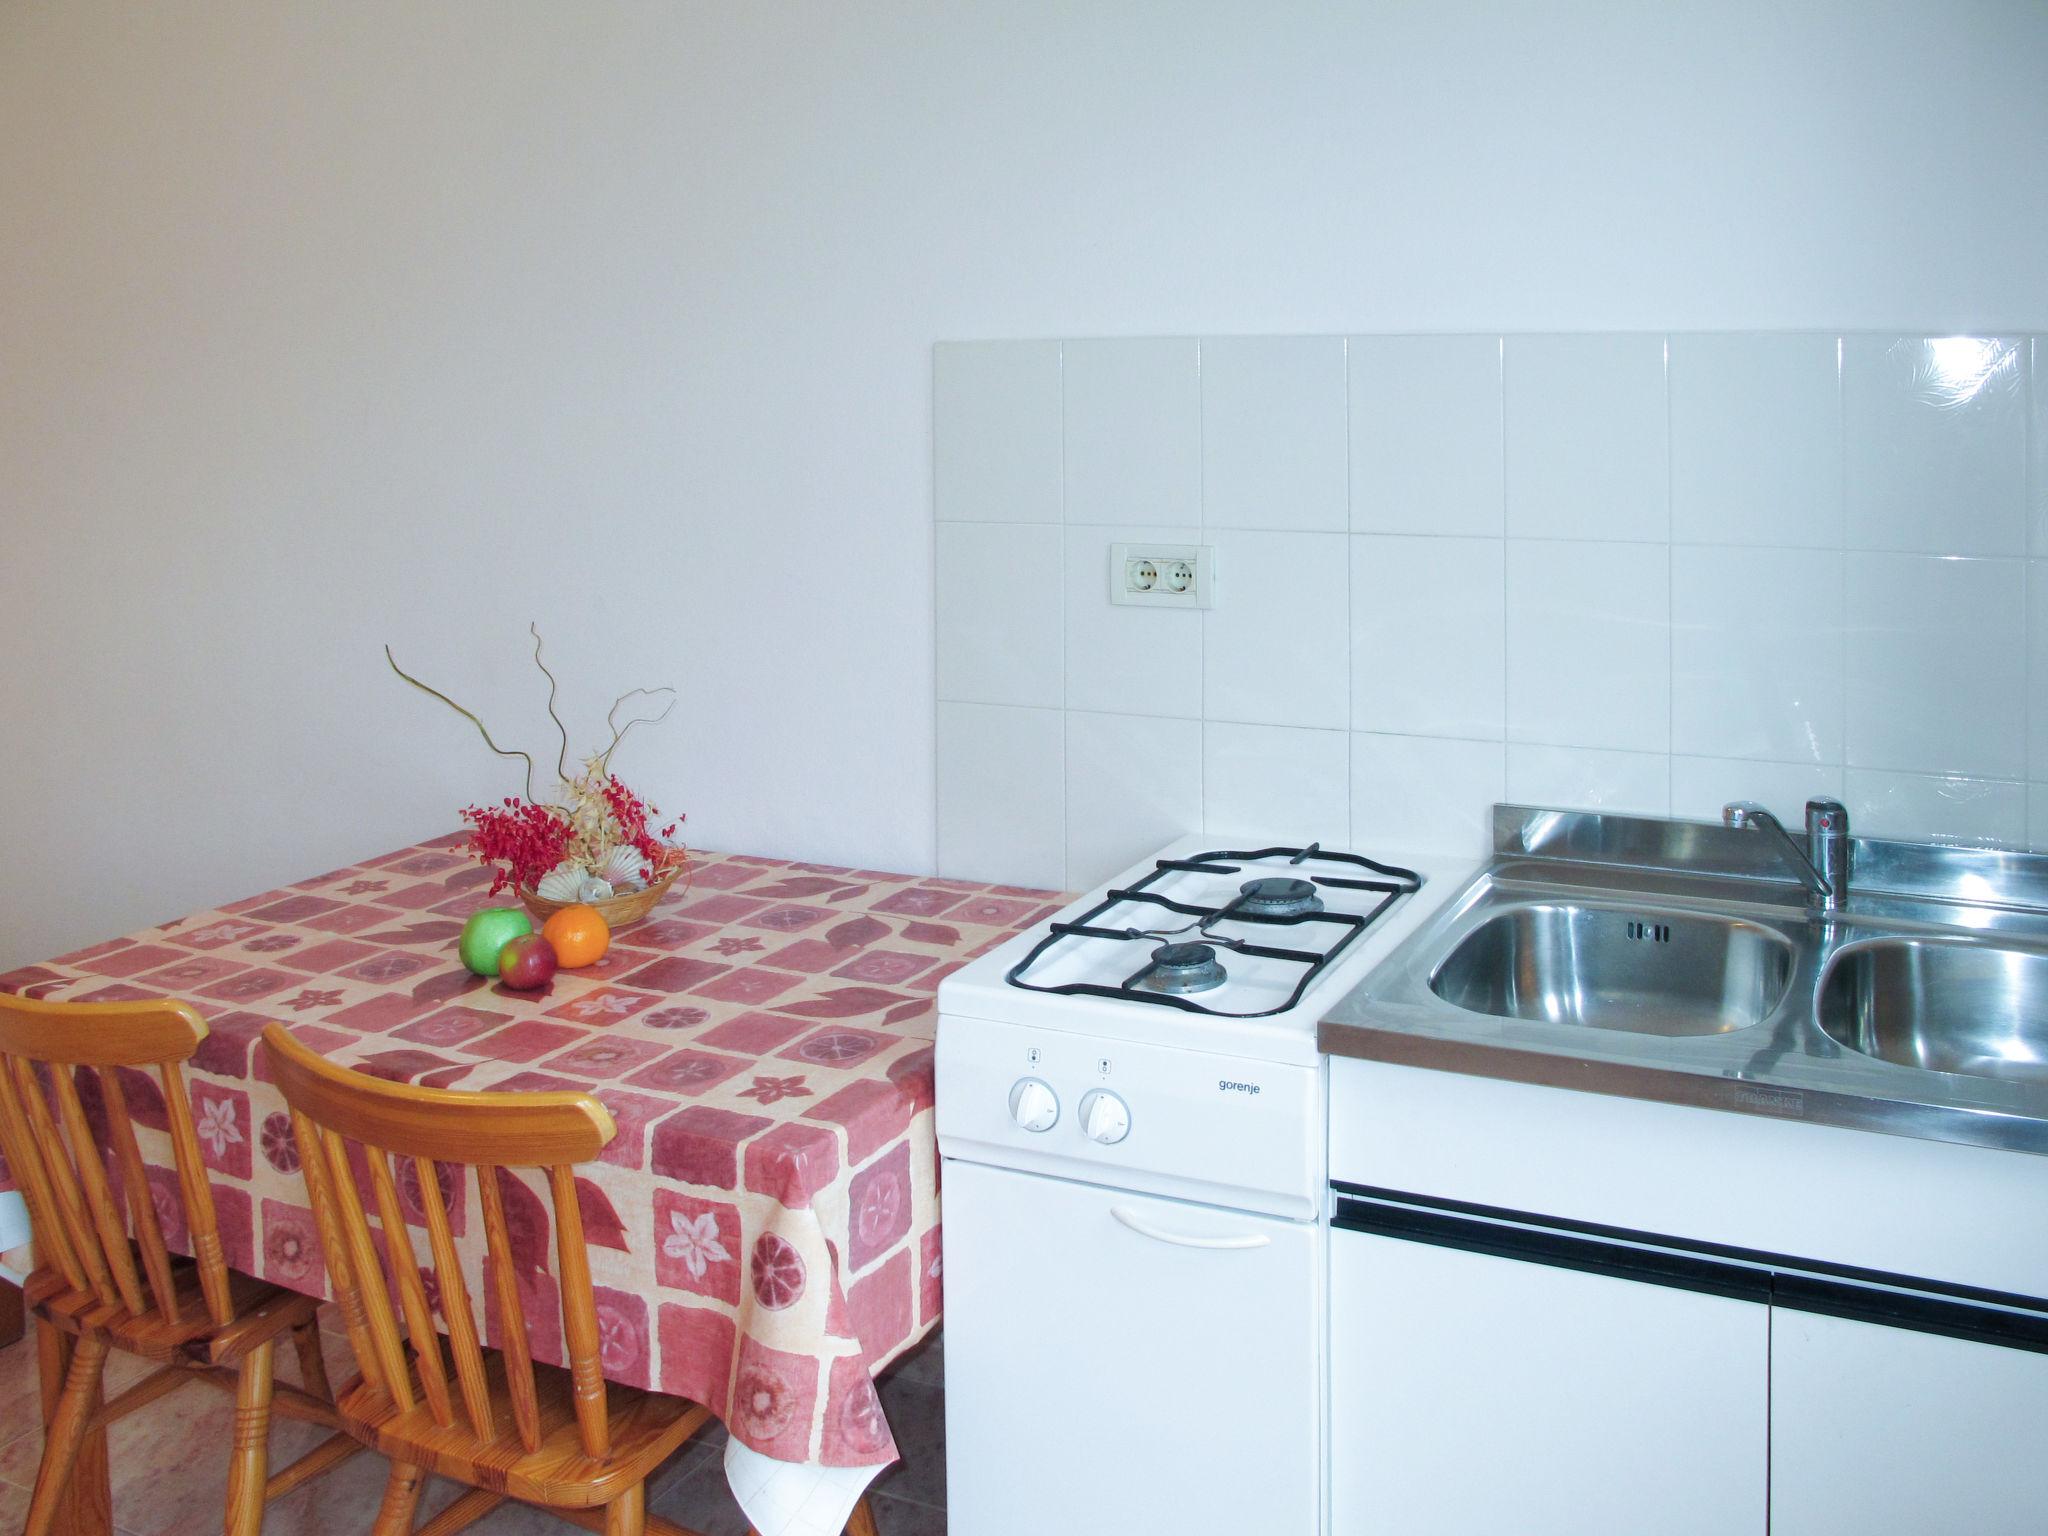 Foto 3 - Apartment in Rovinj mit blick aufs meer